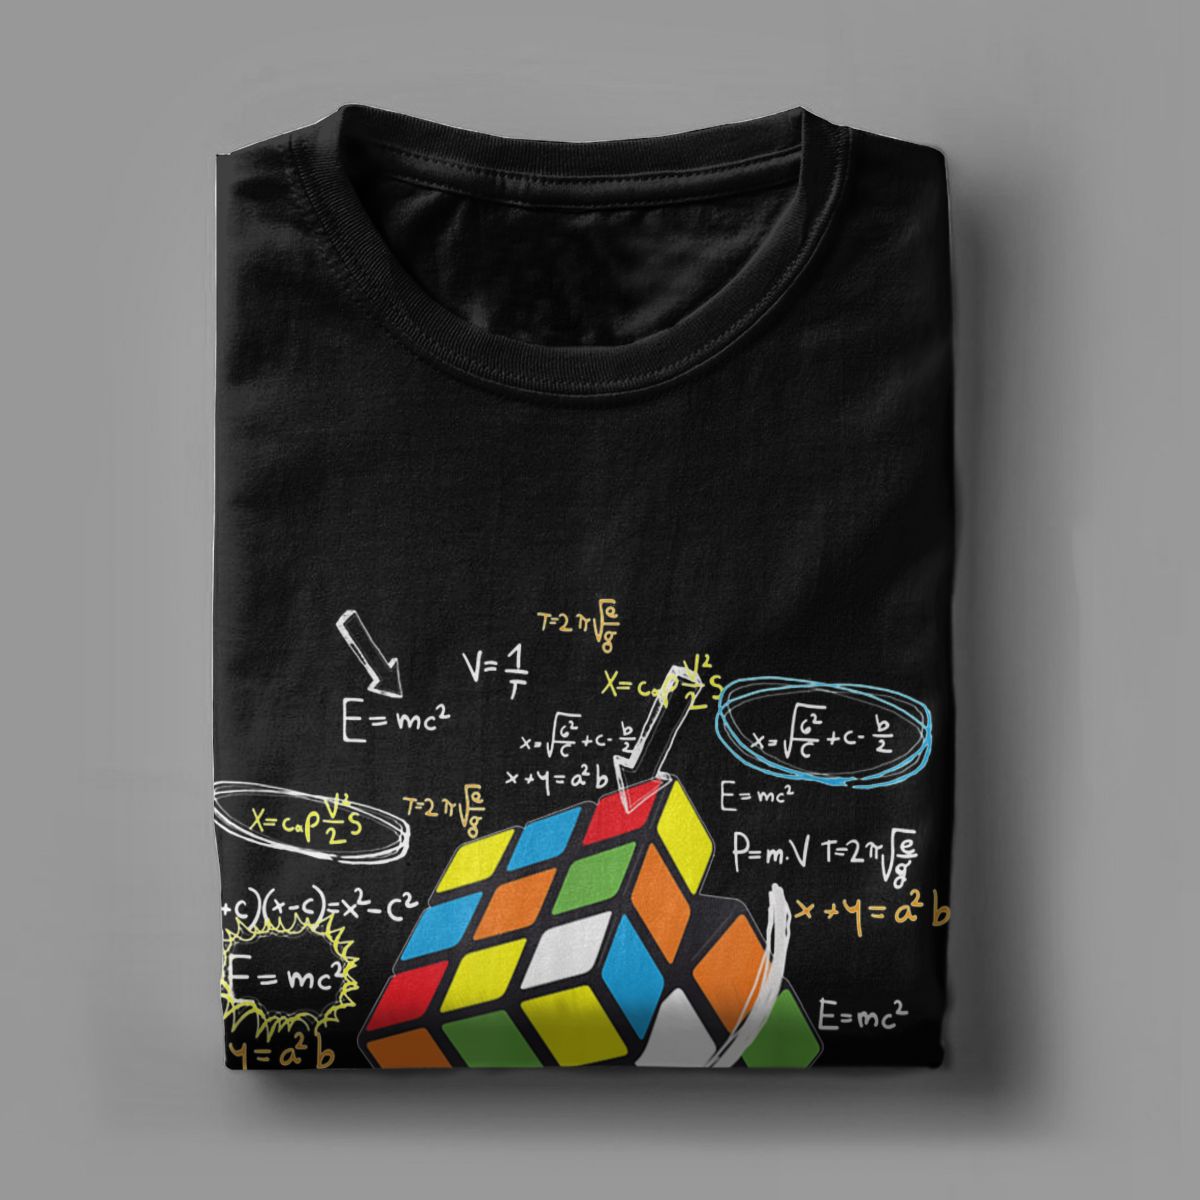 Math Rubik Rubix Rubics Player Cube Men T Shirt Math Lovers Humor Tee Shirt Short Sleeve Crew Neck T-Shirt Cotton Plus Size Tops